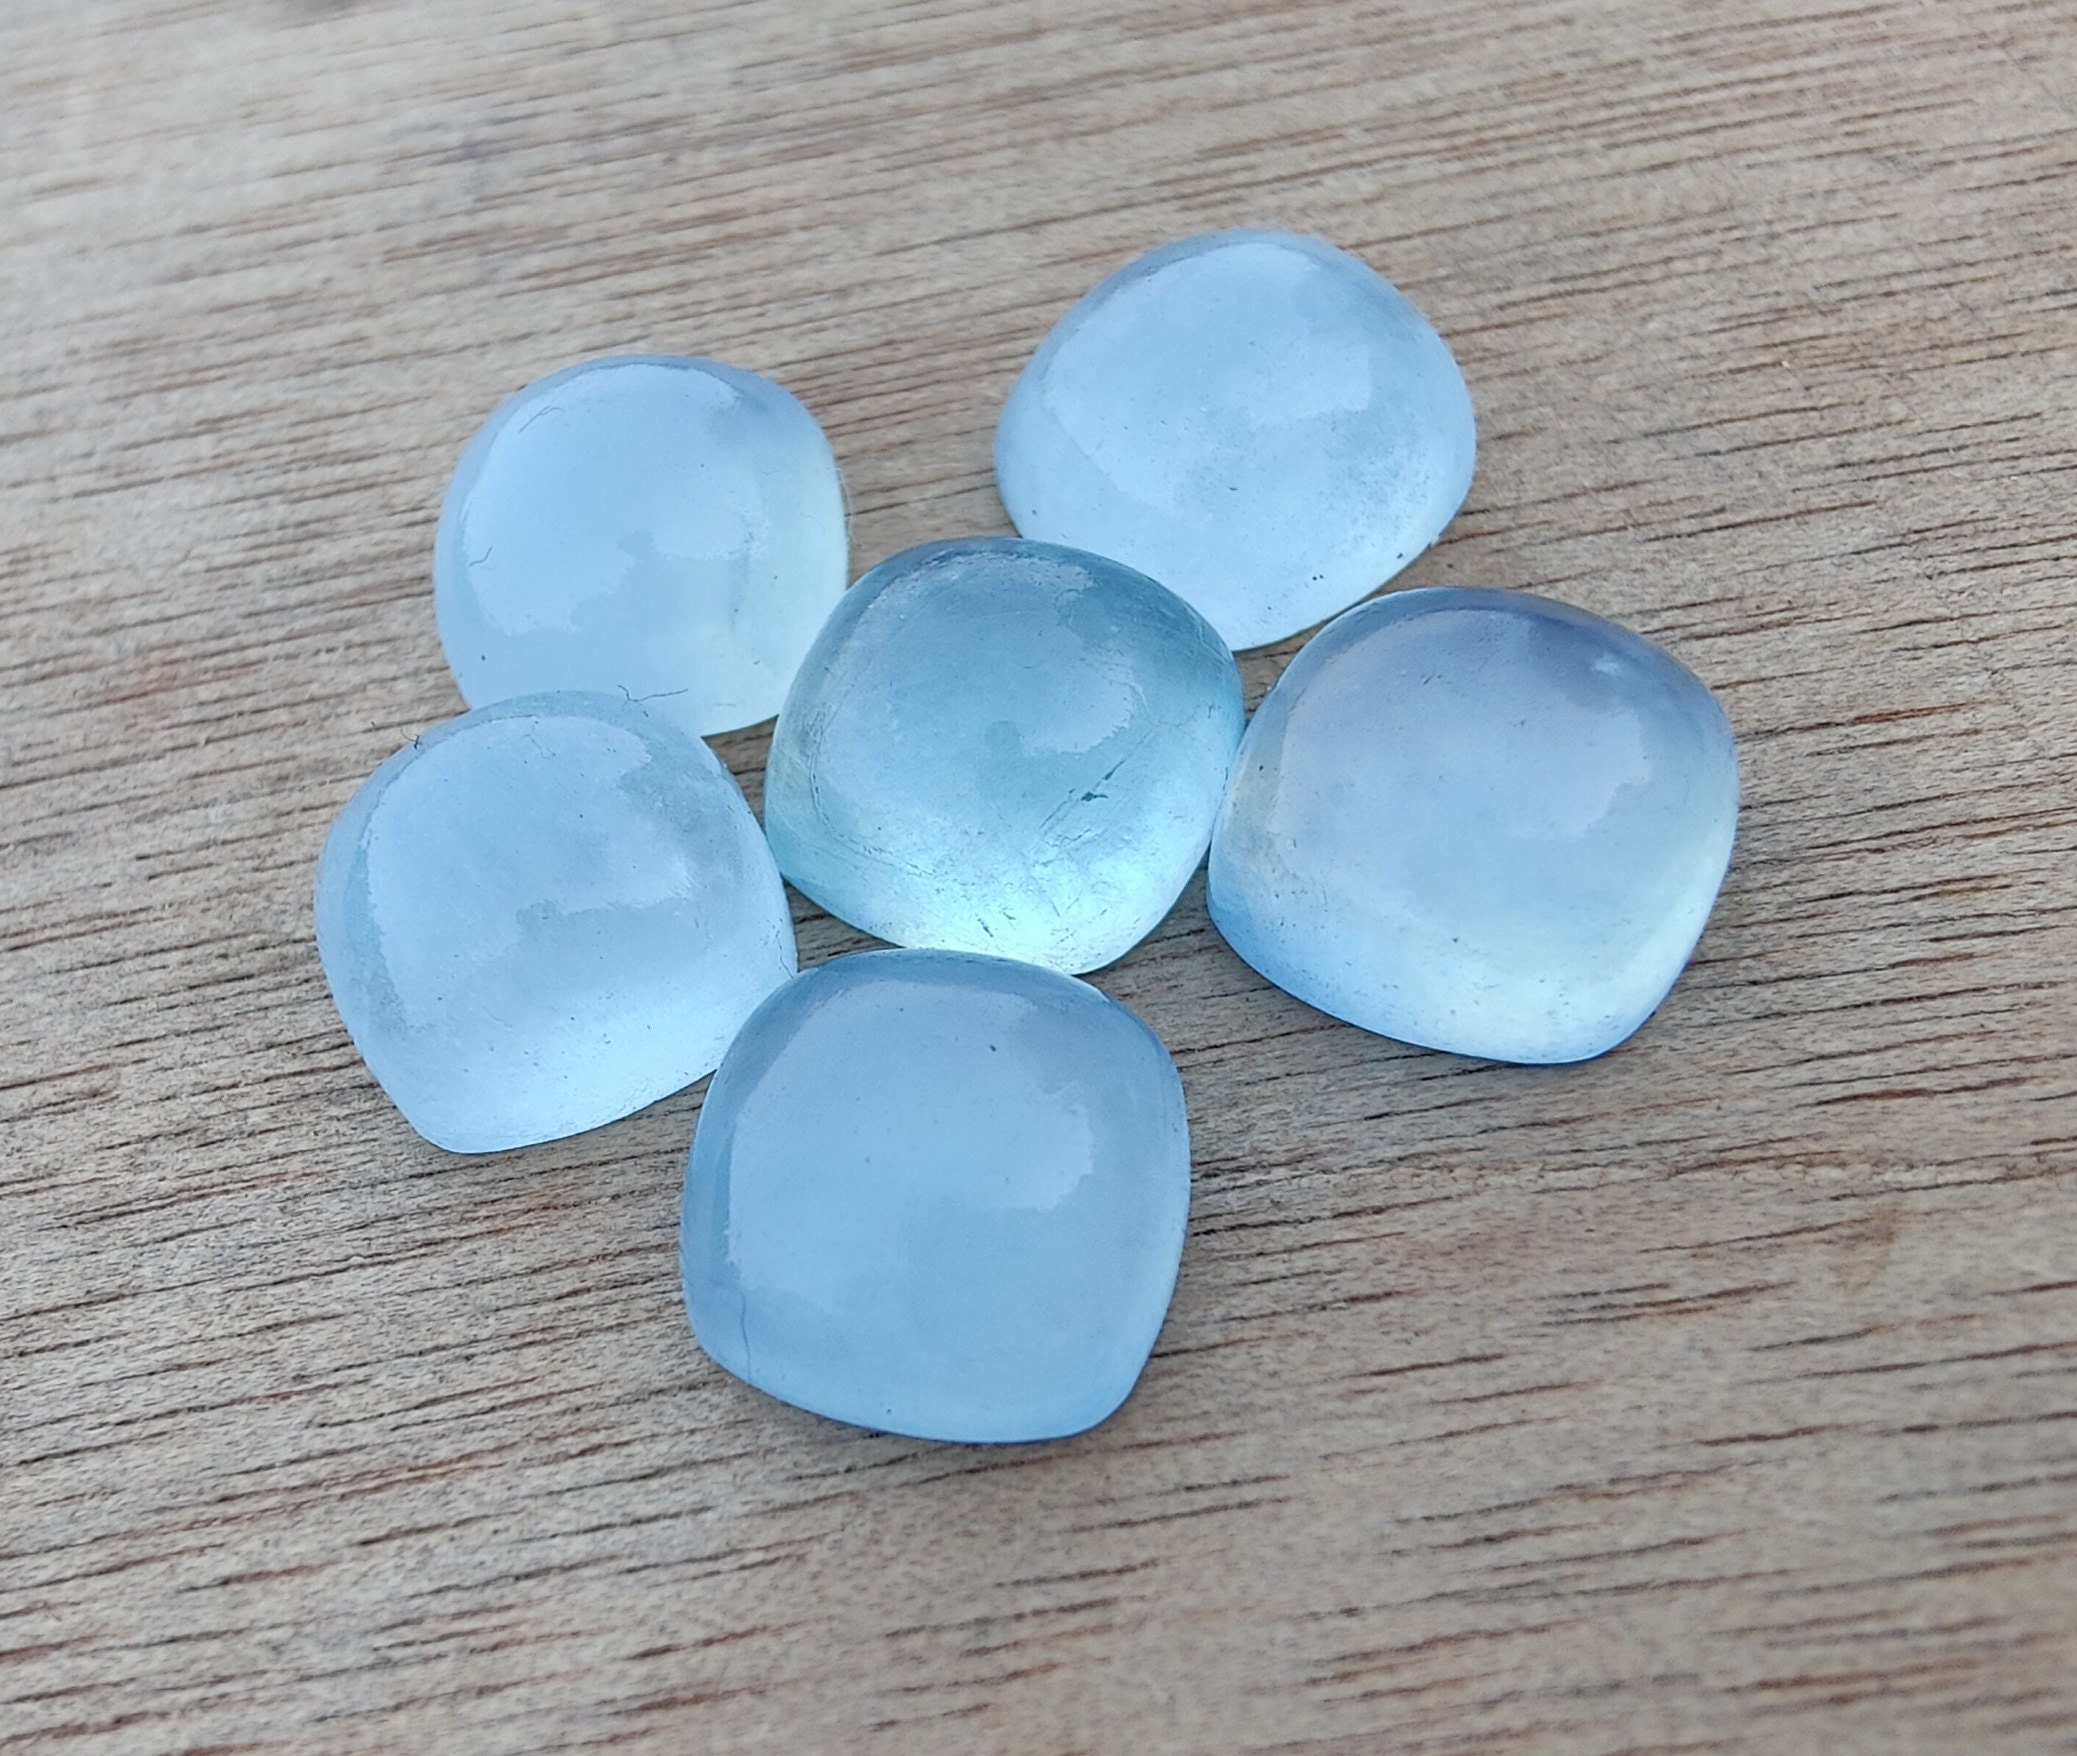 4.09 ct Untreated Aquamarine loose gemstone for sale wholesale price